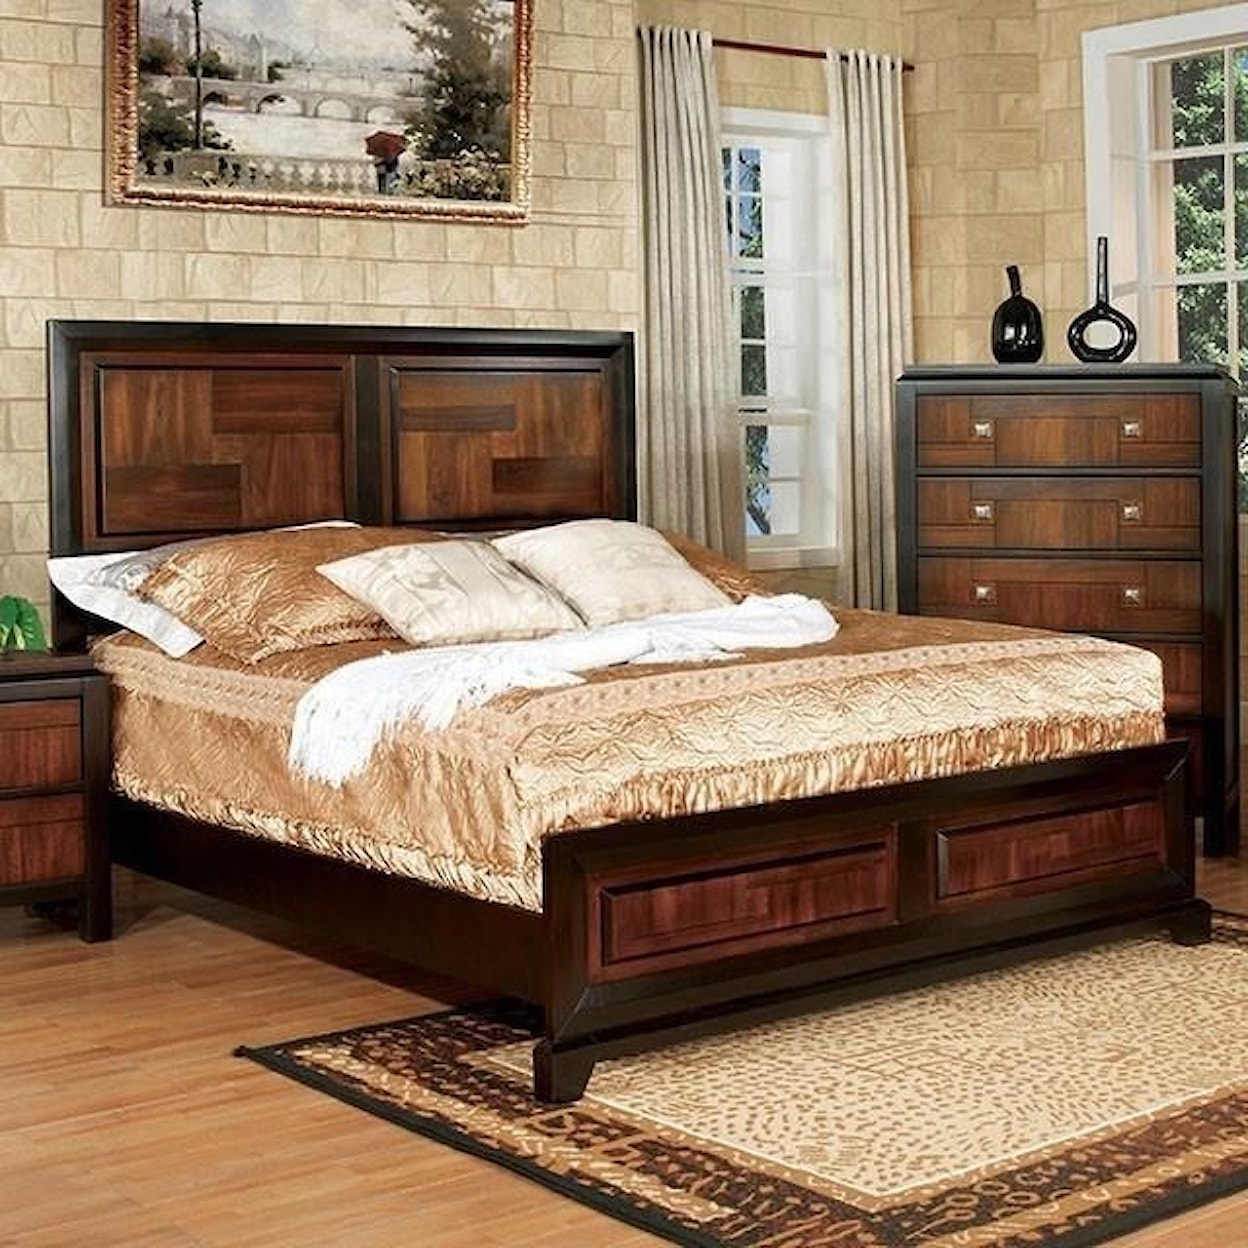 Furniture of America Patra California King Bed